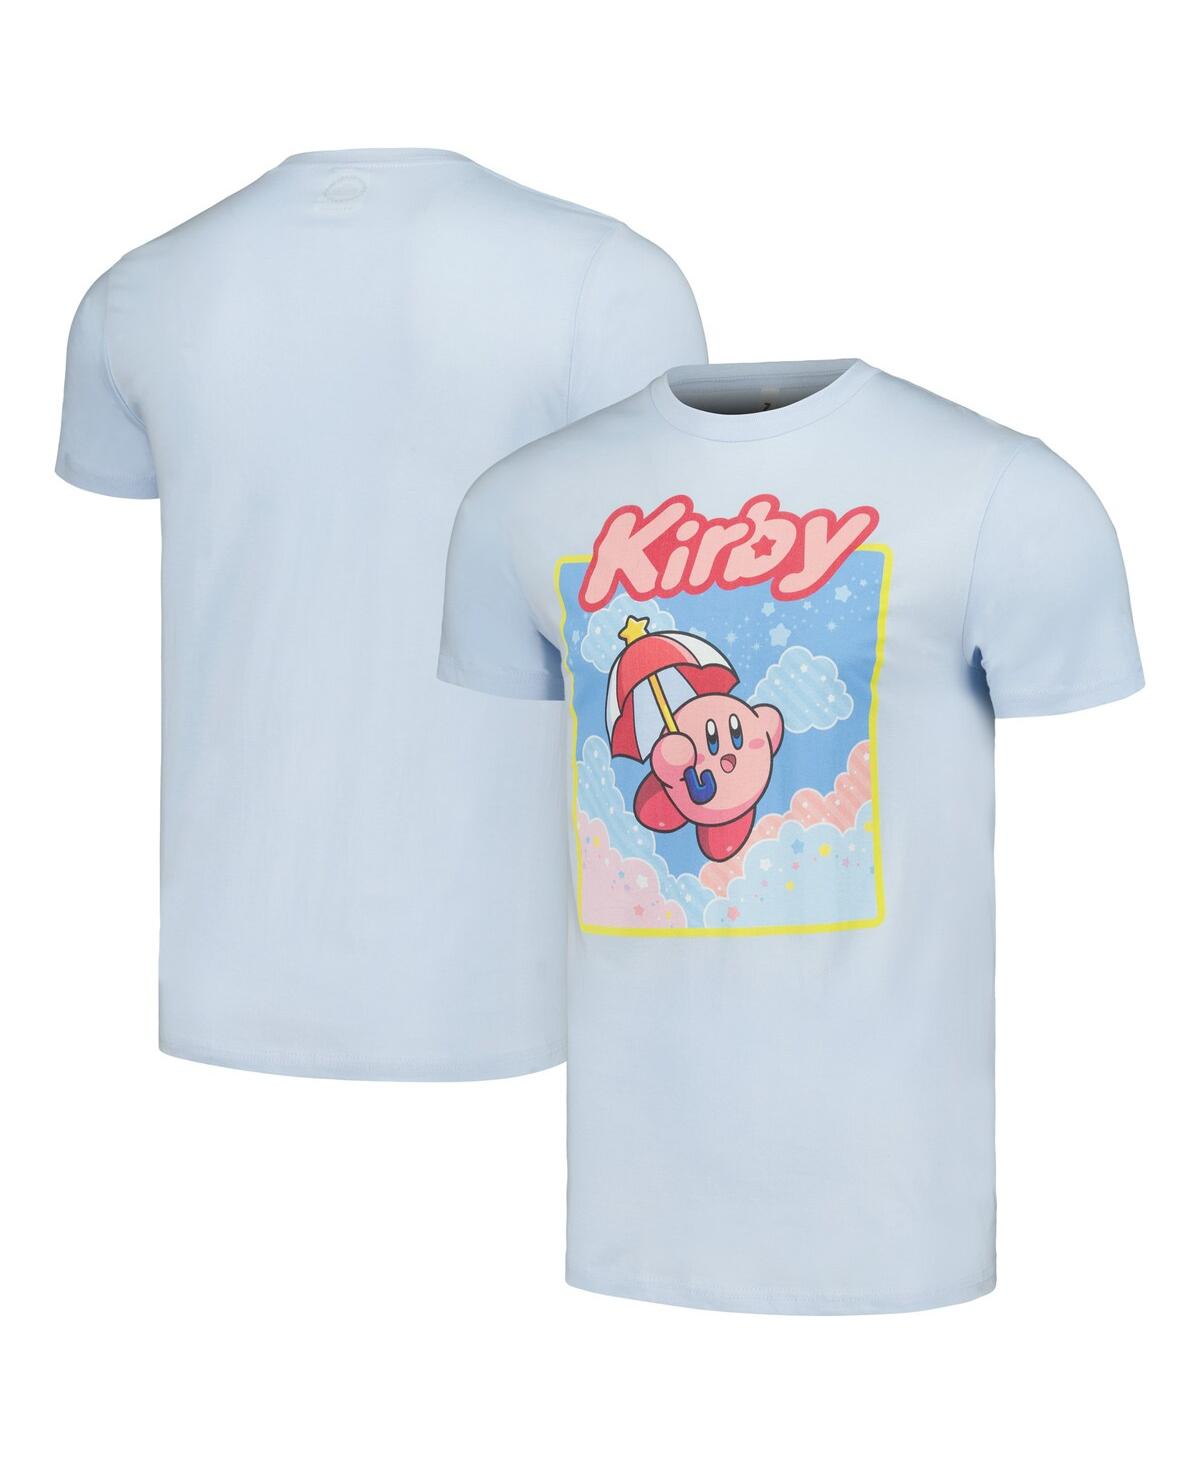 Men's and Women's Mad Engine Light Blue Nintendo Kirby Starry Box T-shirt - Light Blue